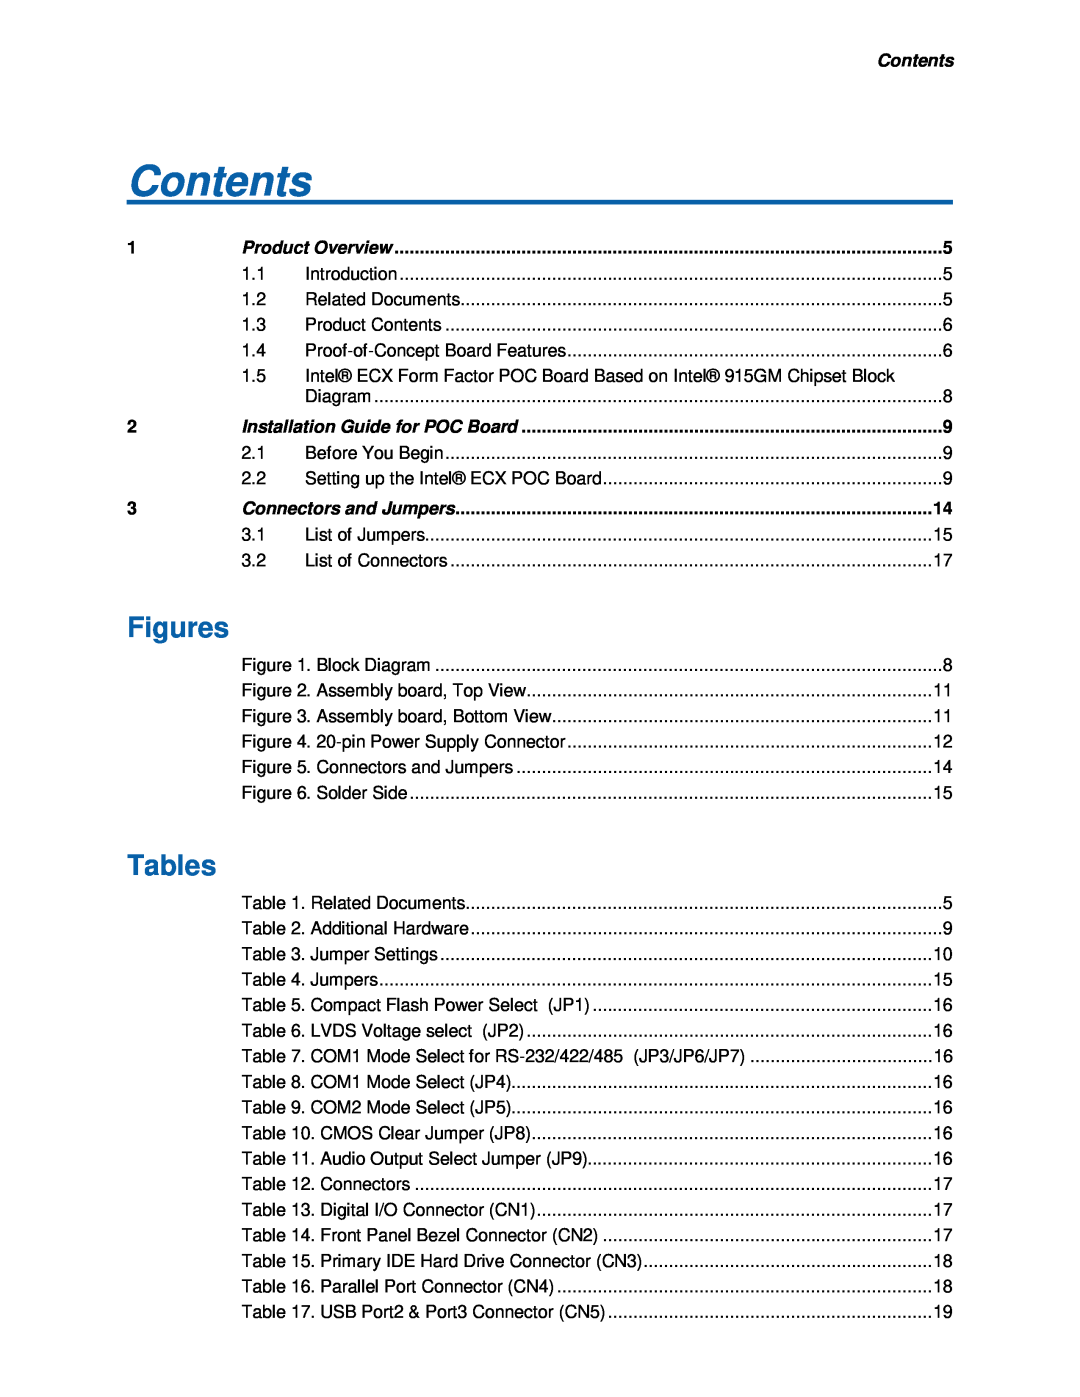 Intel 915GM user manual Figures, Tables, Contents 